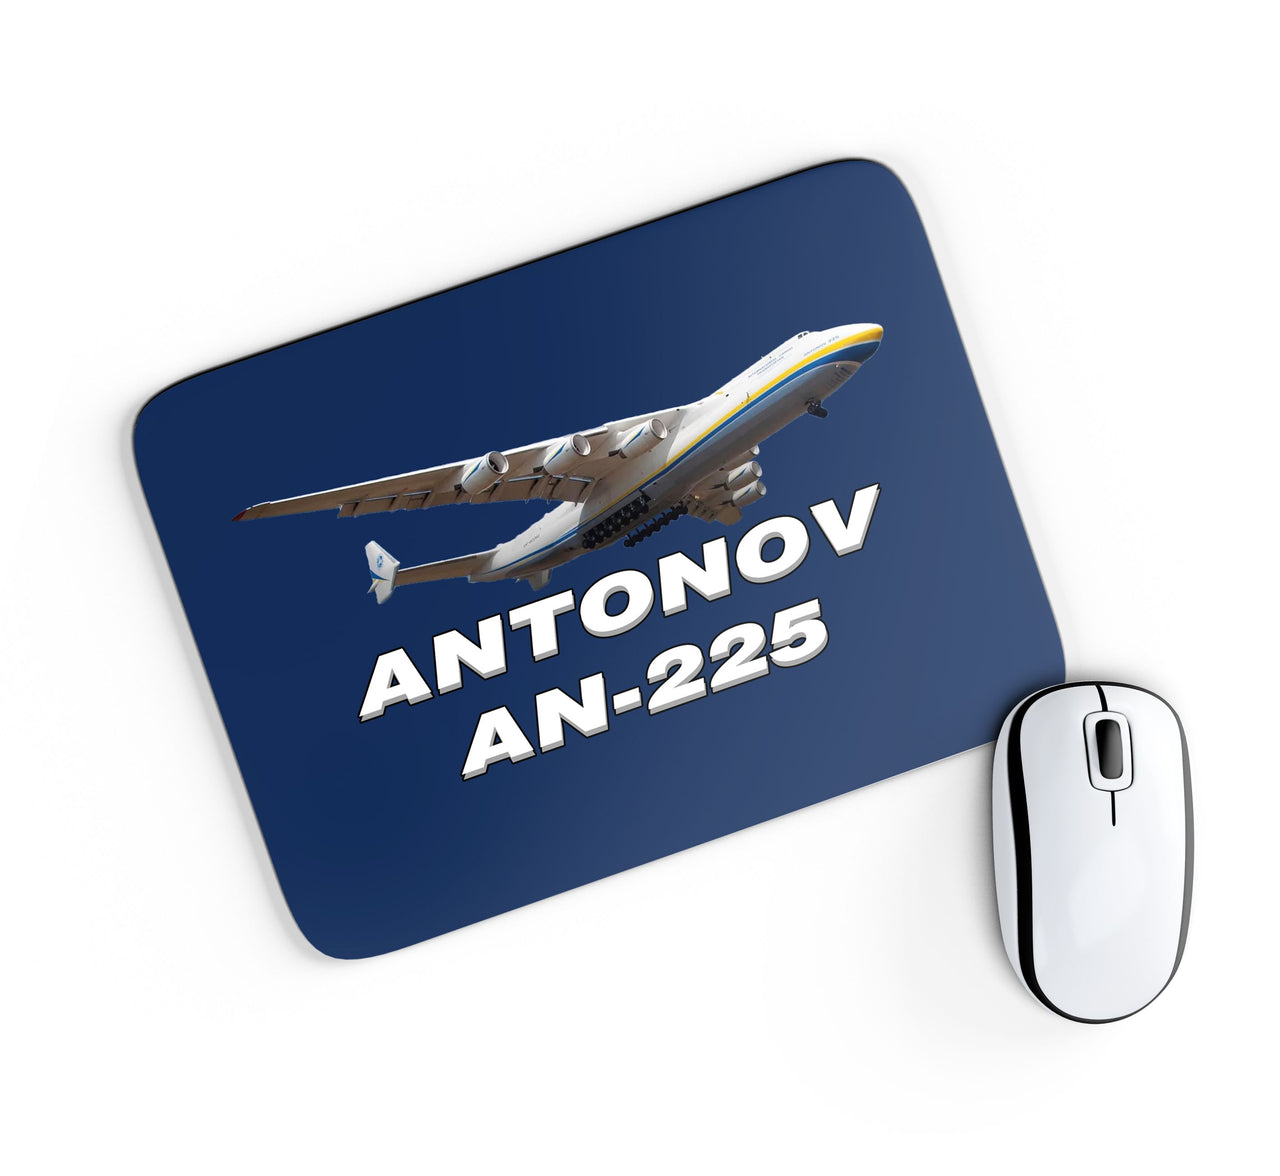 Antonov AN-225 (15) Designed Mouse Pads